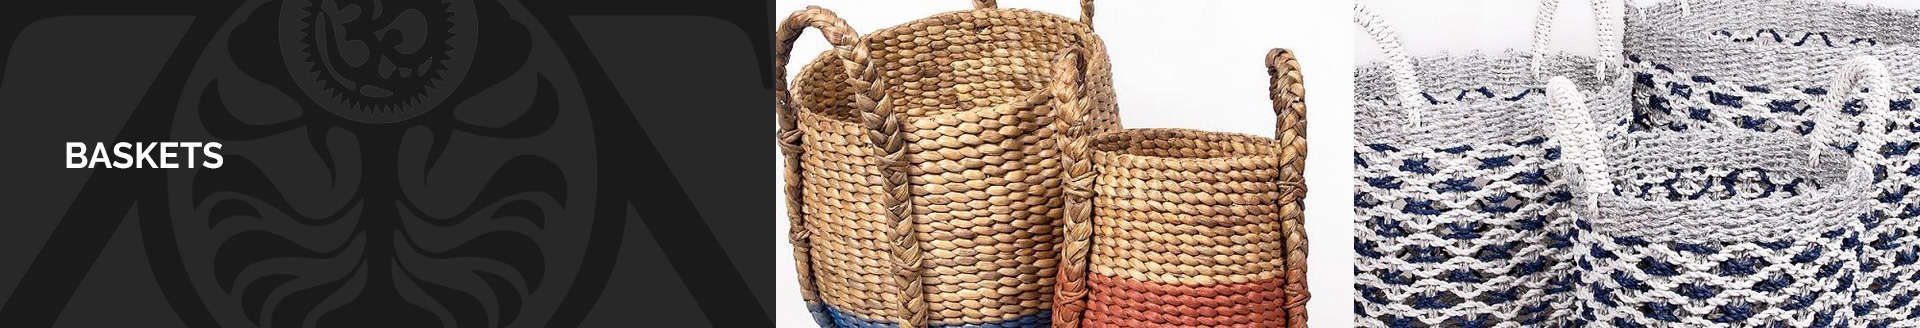 baskets catalogue manufacturer indonesia exporters wholesalers suppliers bali java jepara zenddu